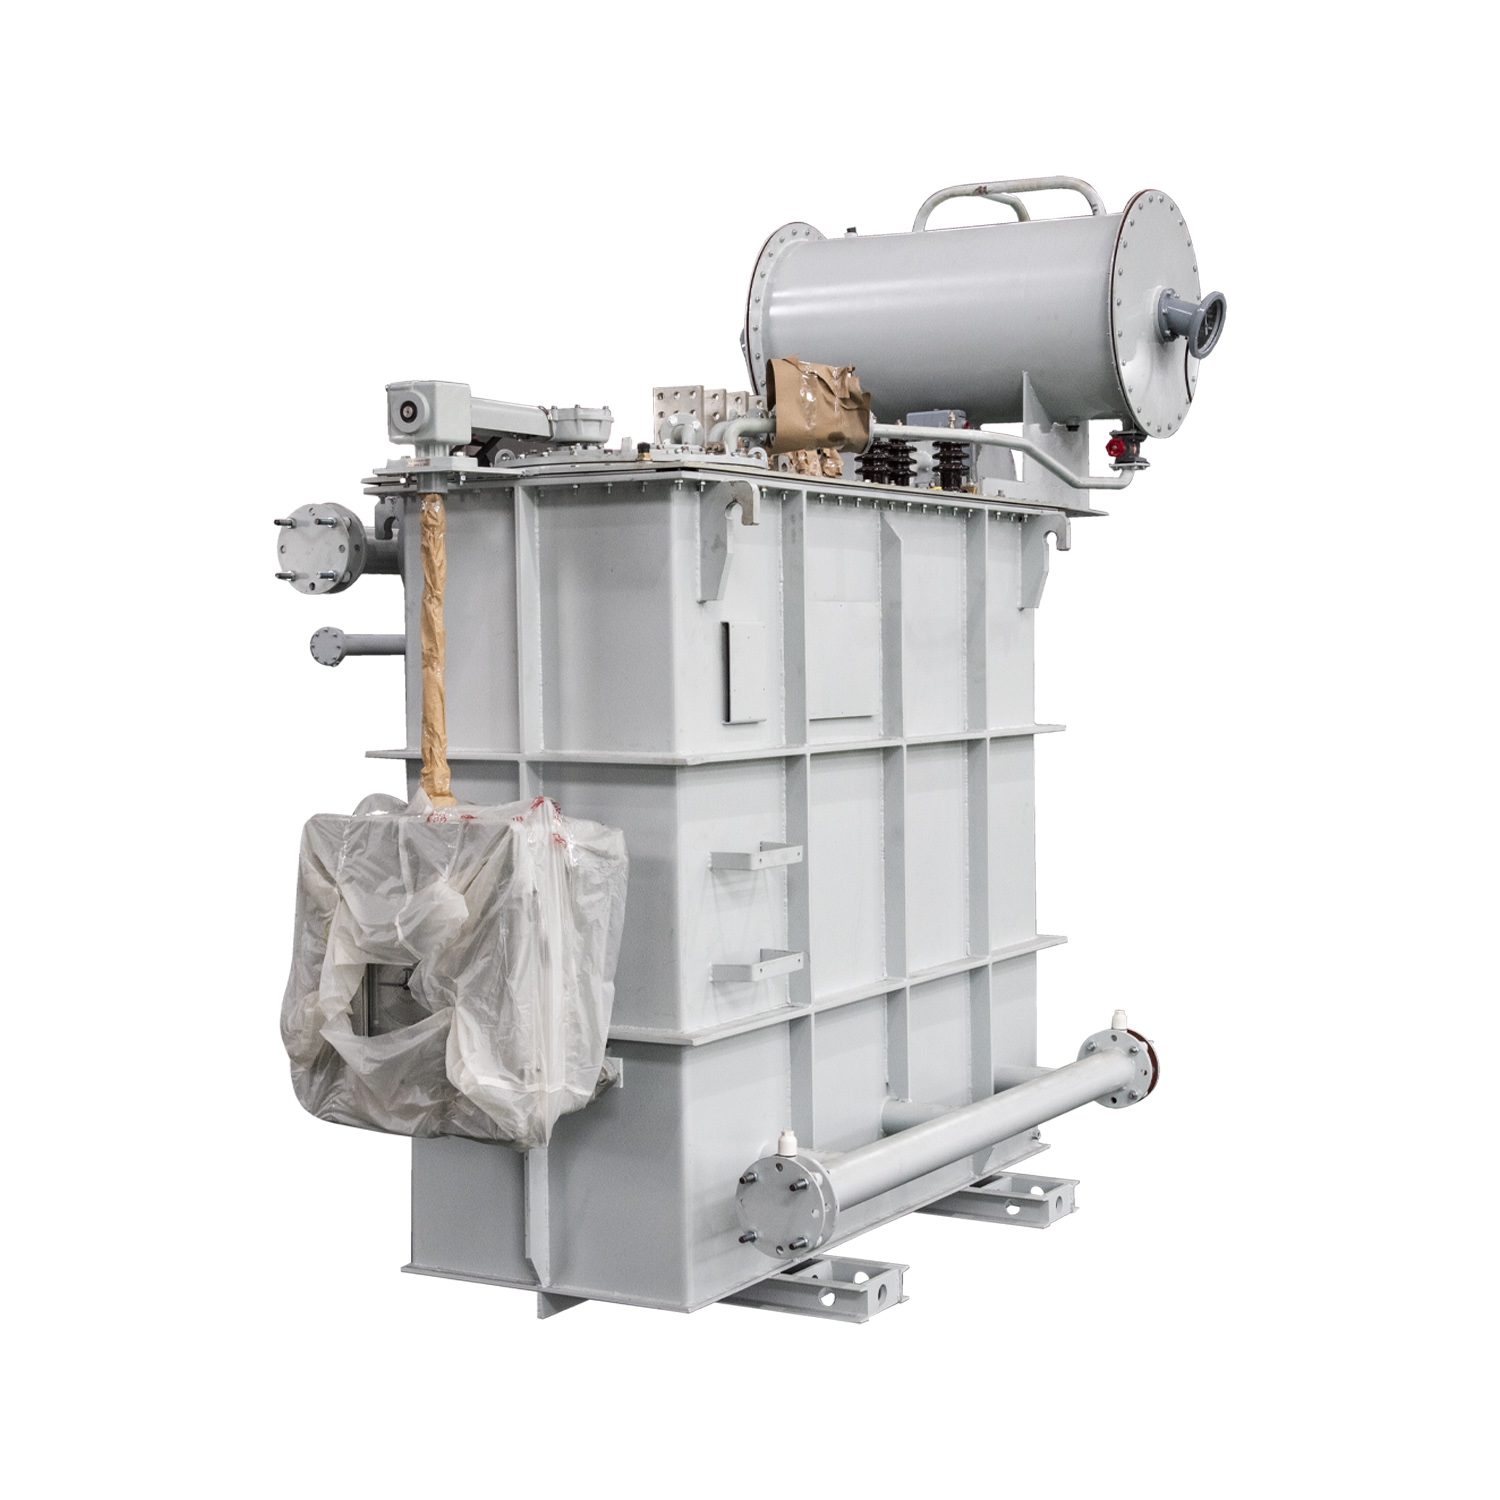 core-type 35kv furnace transformer for submerged arc furnace